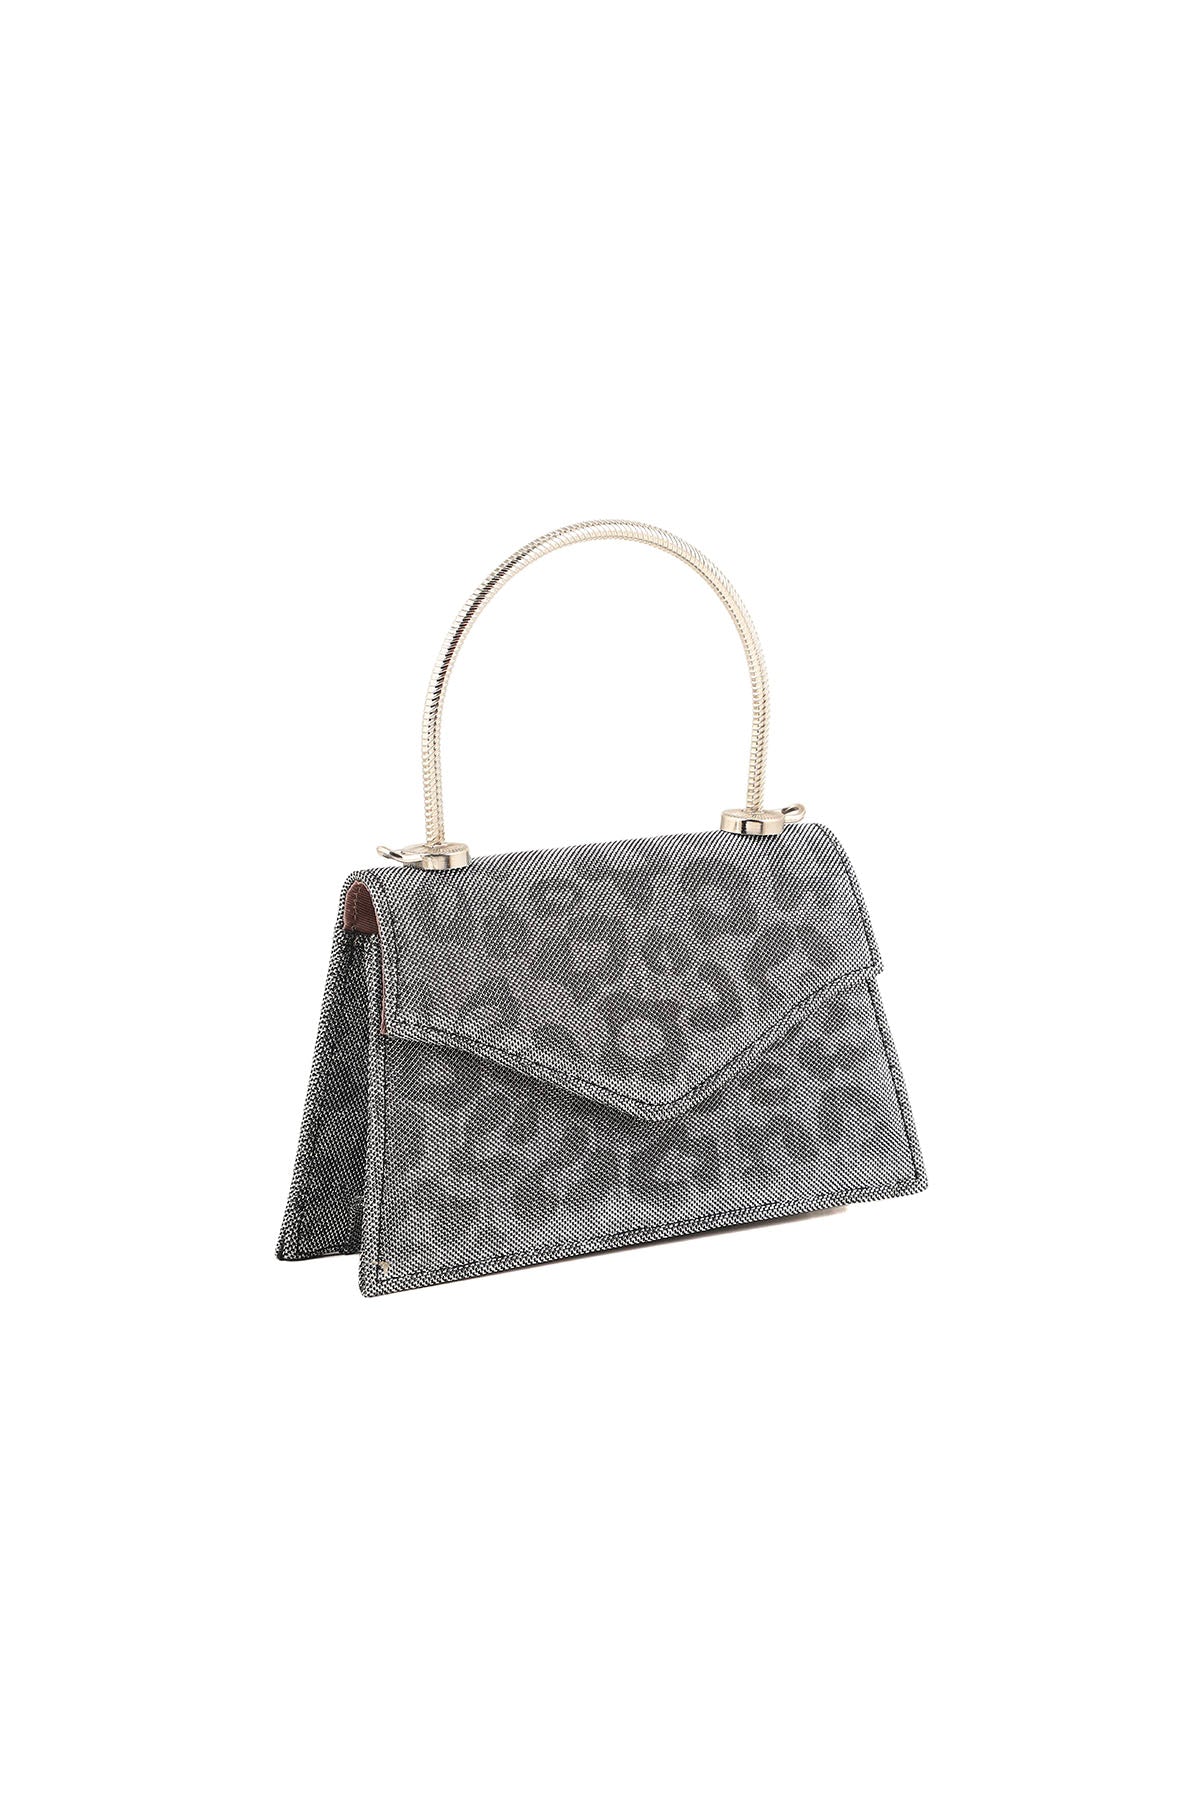 Top Handle Hand Bags B21604-Silver – Insignia PK